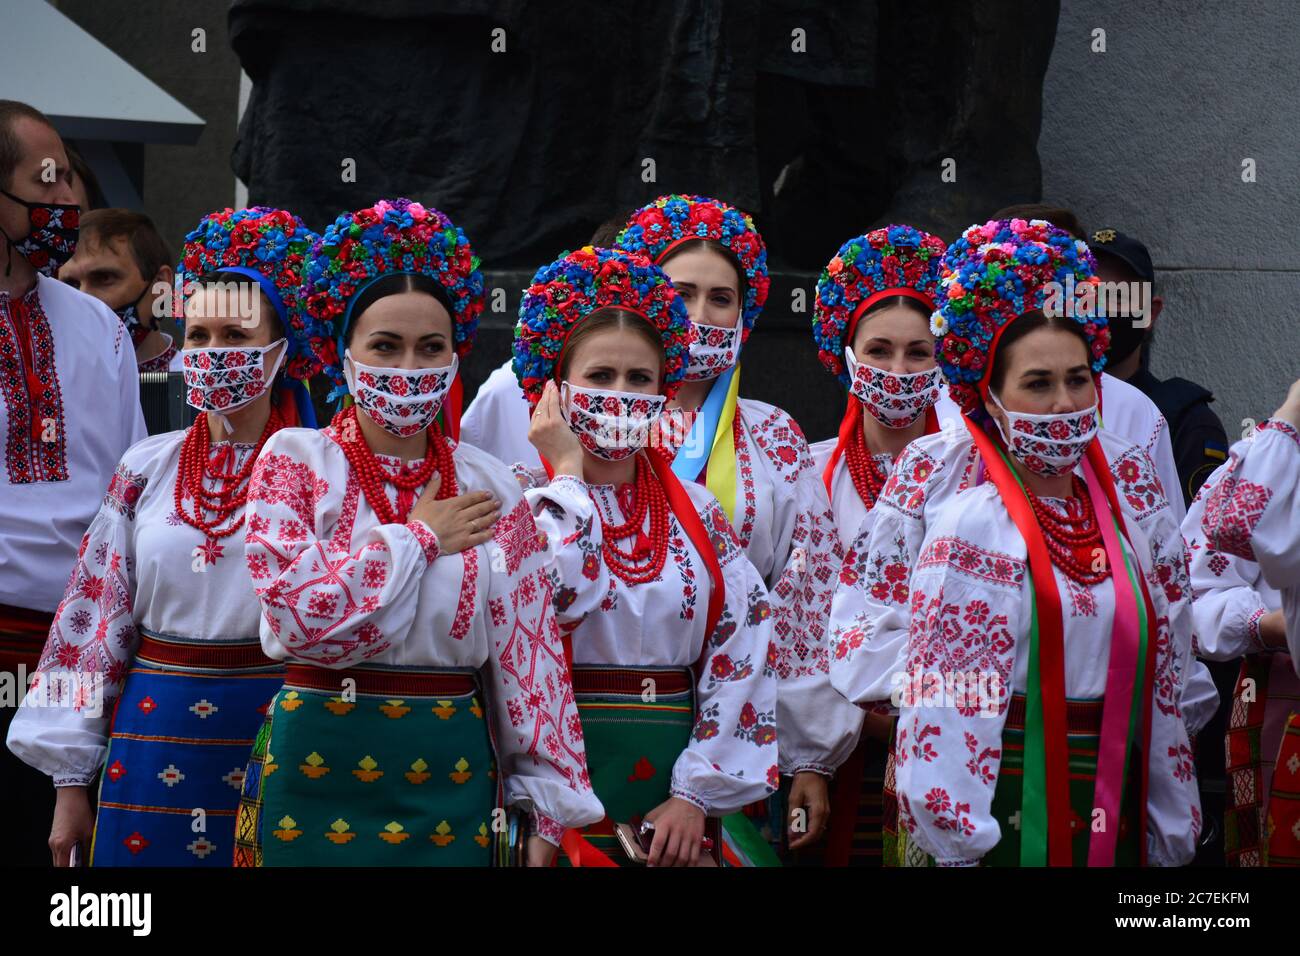 Coronavirus outbreak: Government prolongs adaptive quarantine until July 31 in Ukraine. Members of the Ukrainian national choir in folk costumes and e Stock Photo